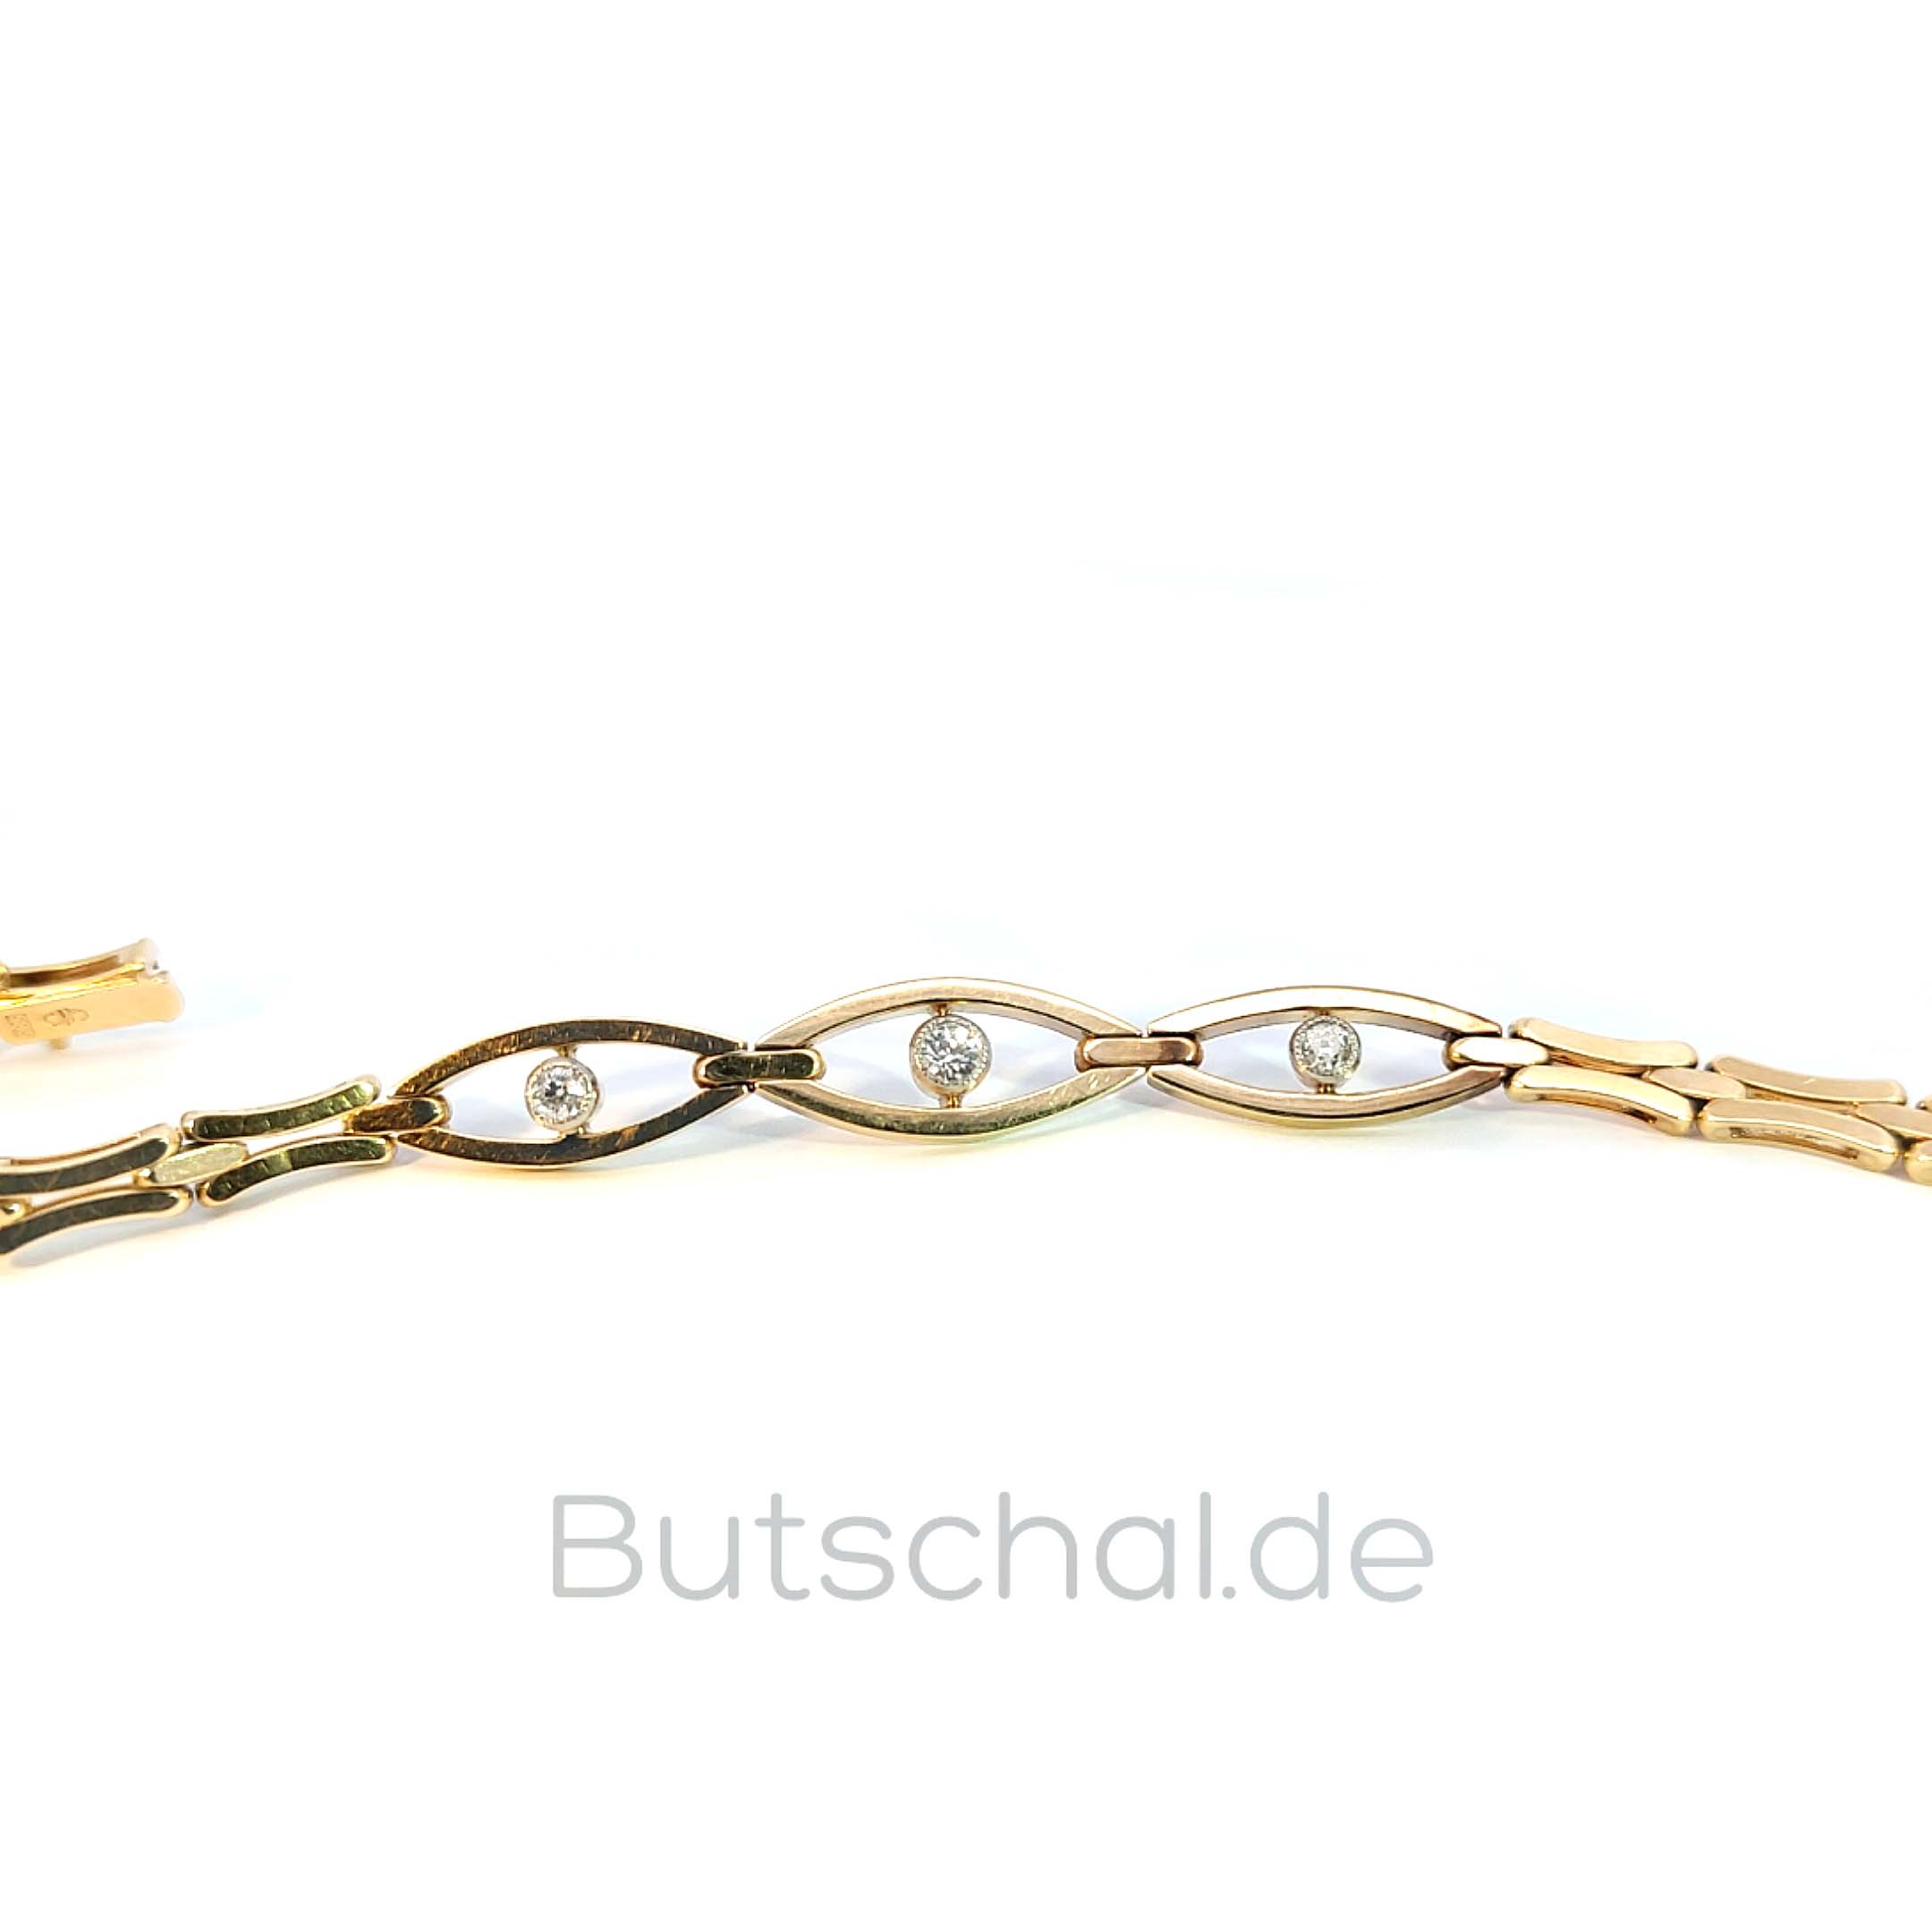 Goldschmuck, Armband in 585 Gold m passendem Halsband